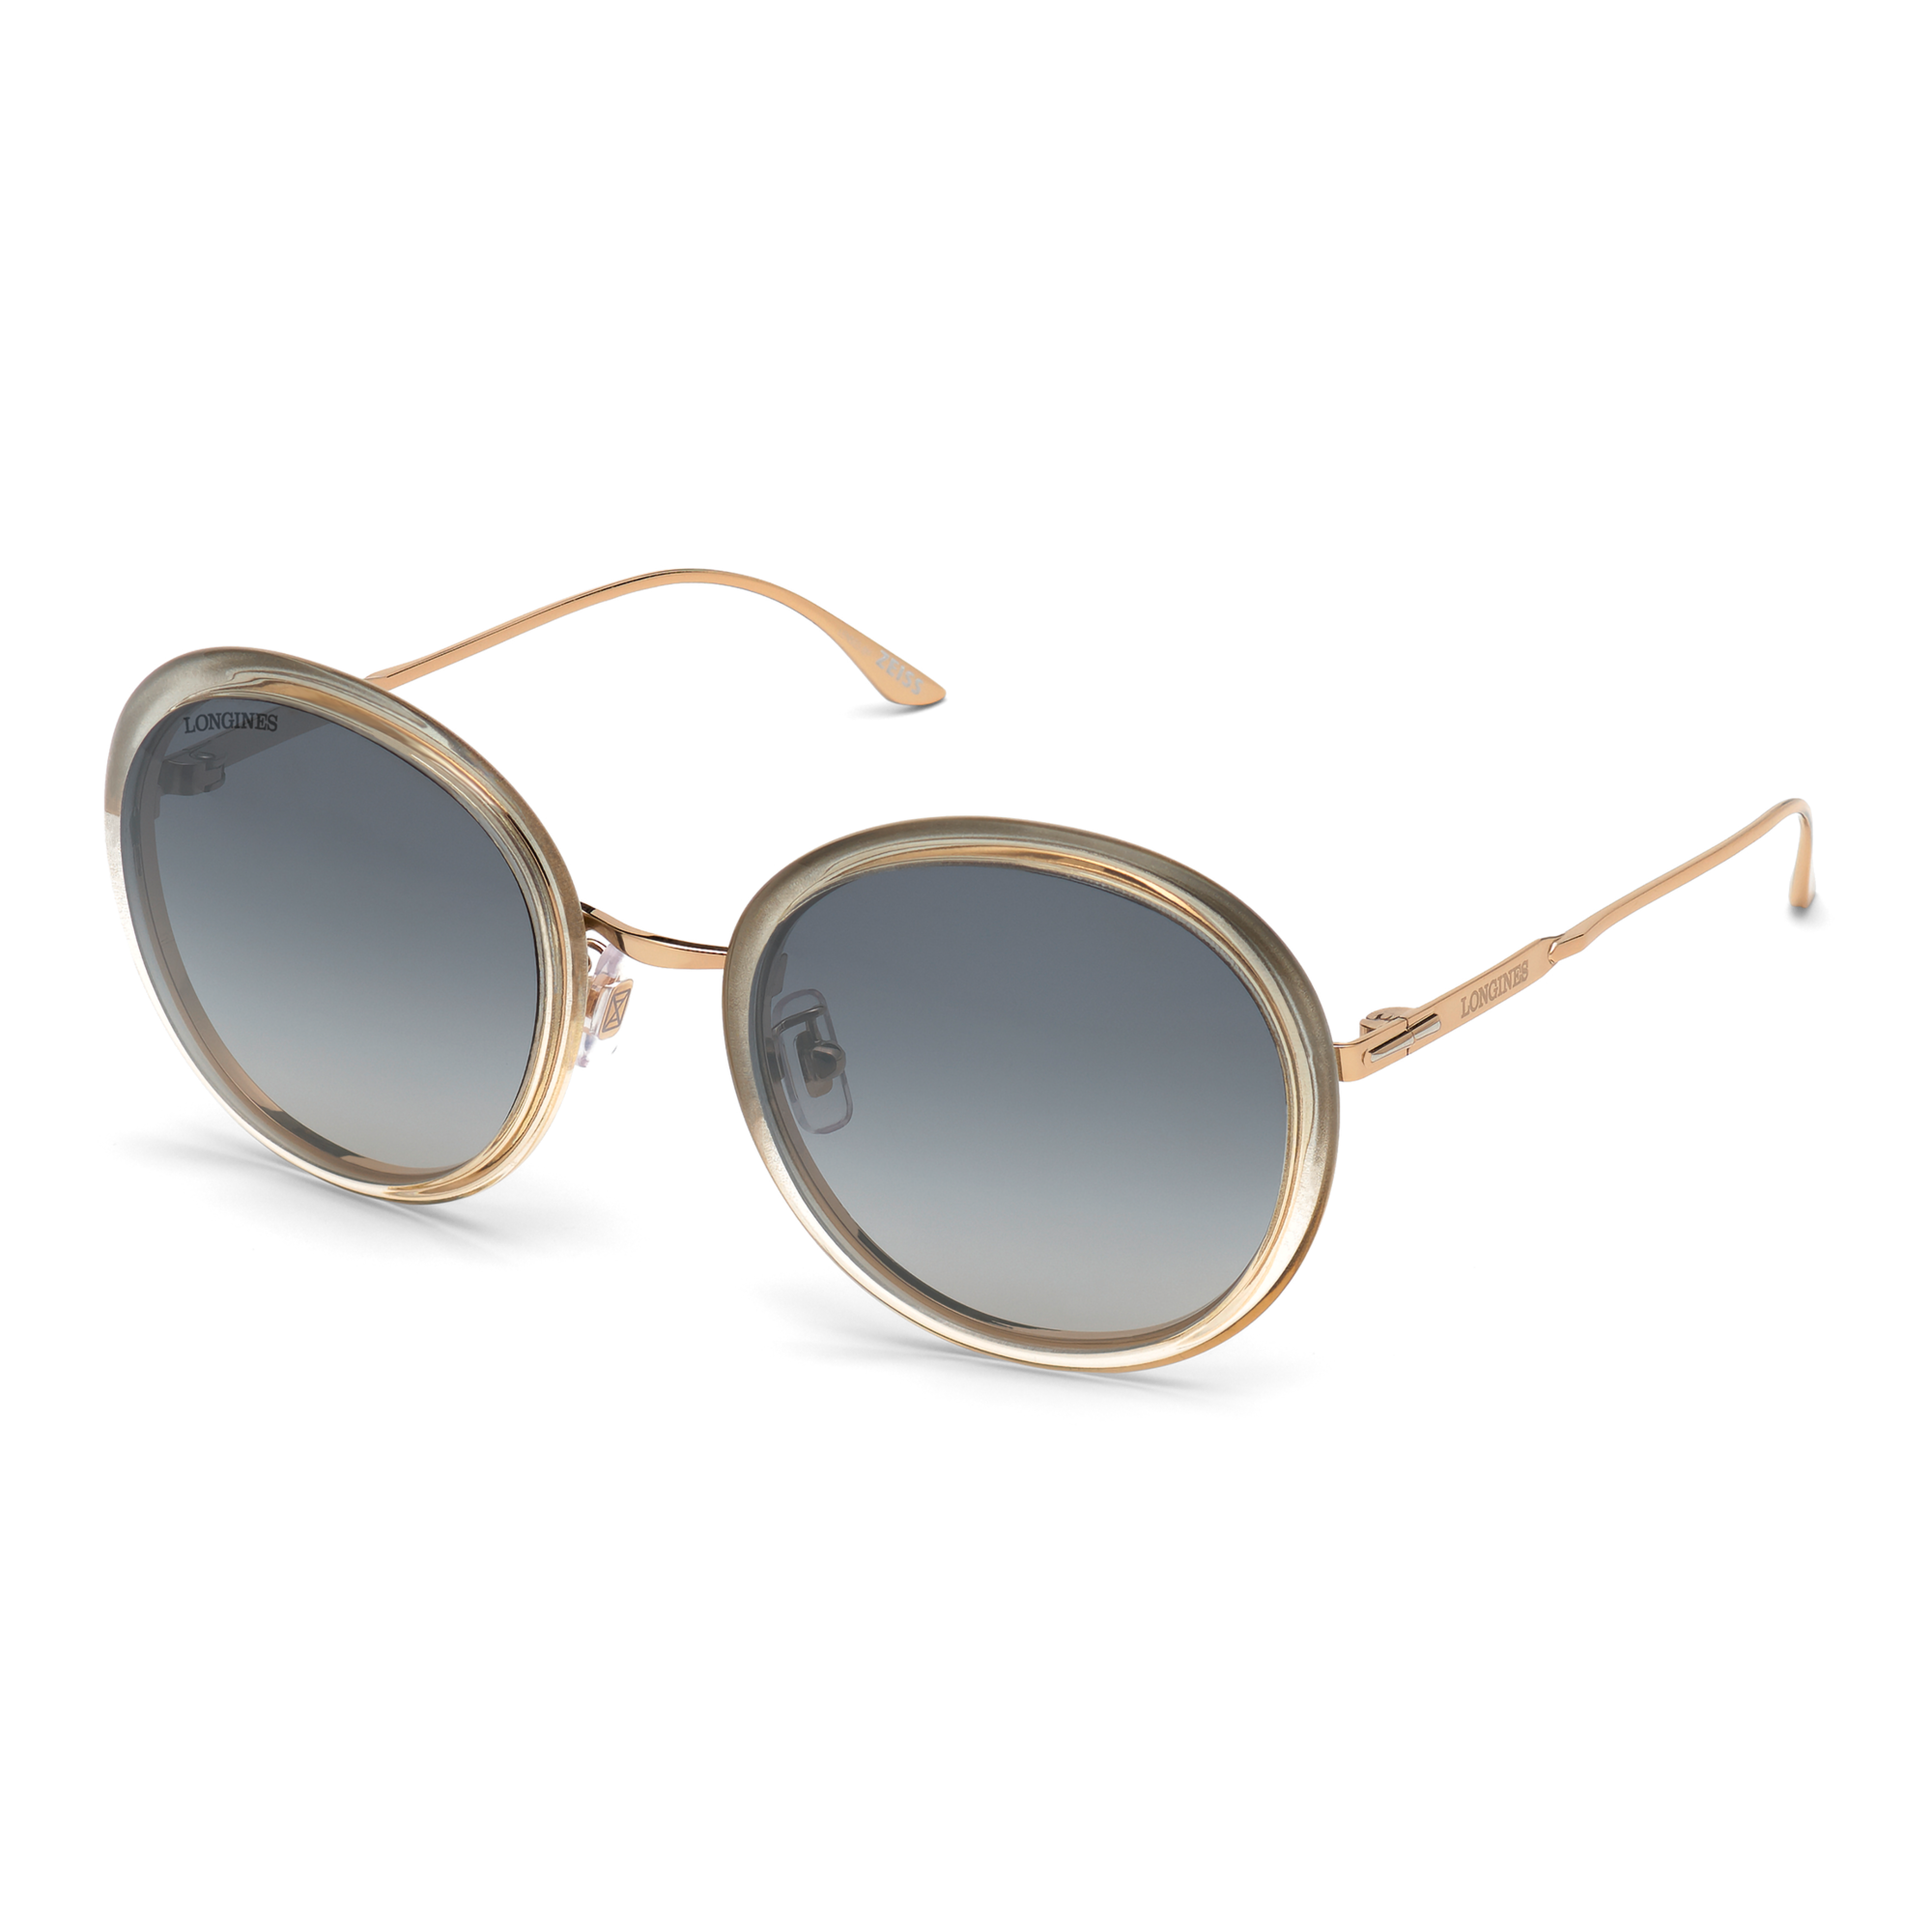 Classic Eyewear | Classic Longines® US Sunglasses Collection 